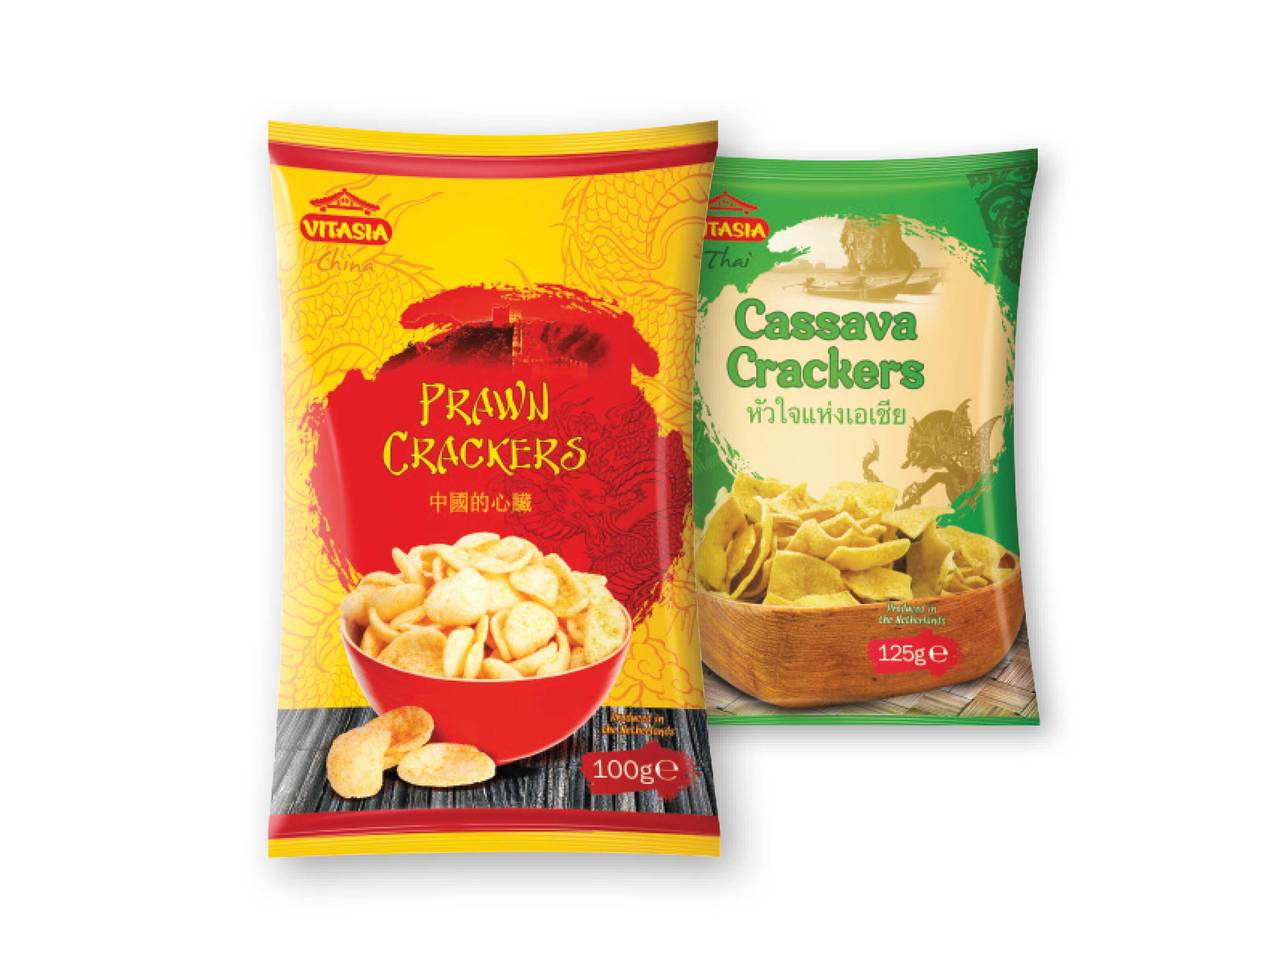 VITASIA Cassava/Prawn Crackers